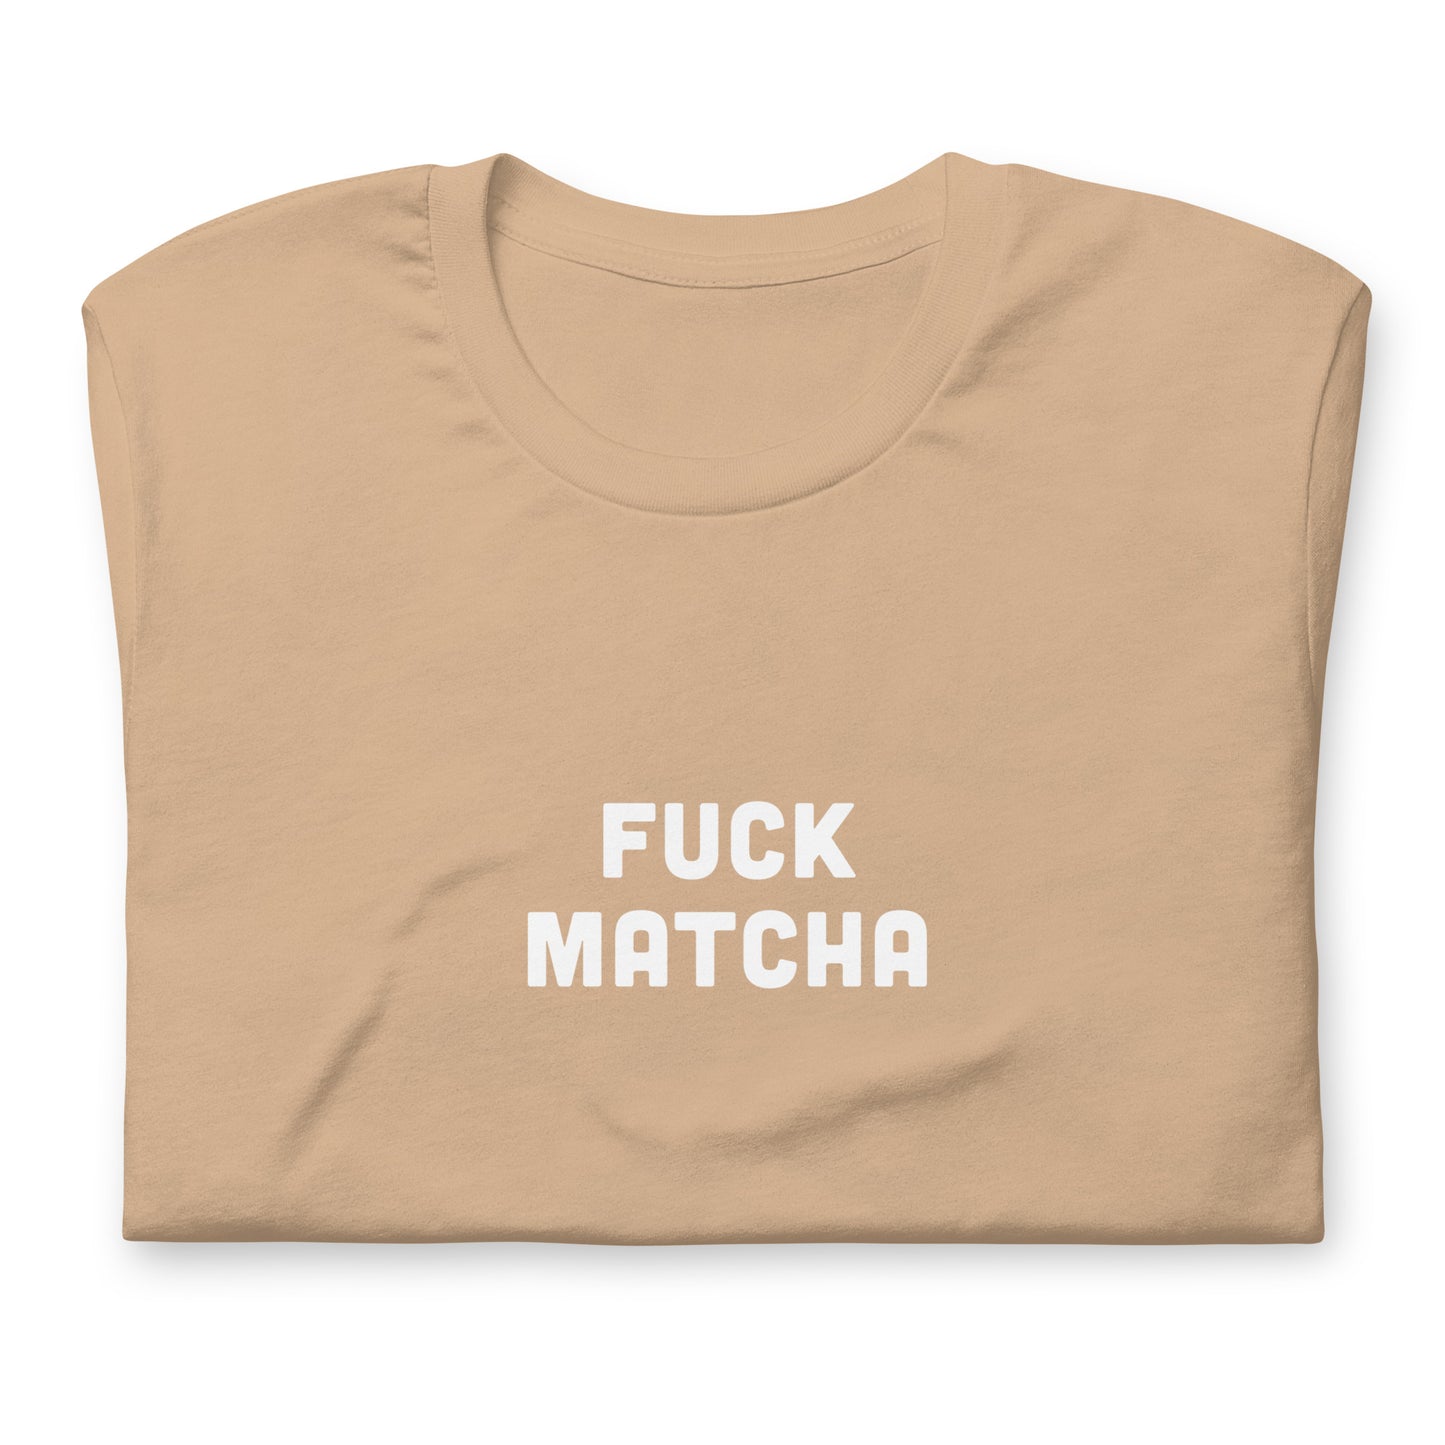 Fuck Matcha T-Shirt Size XL Color Forest